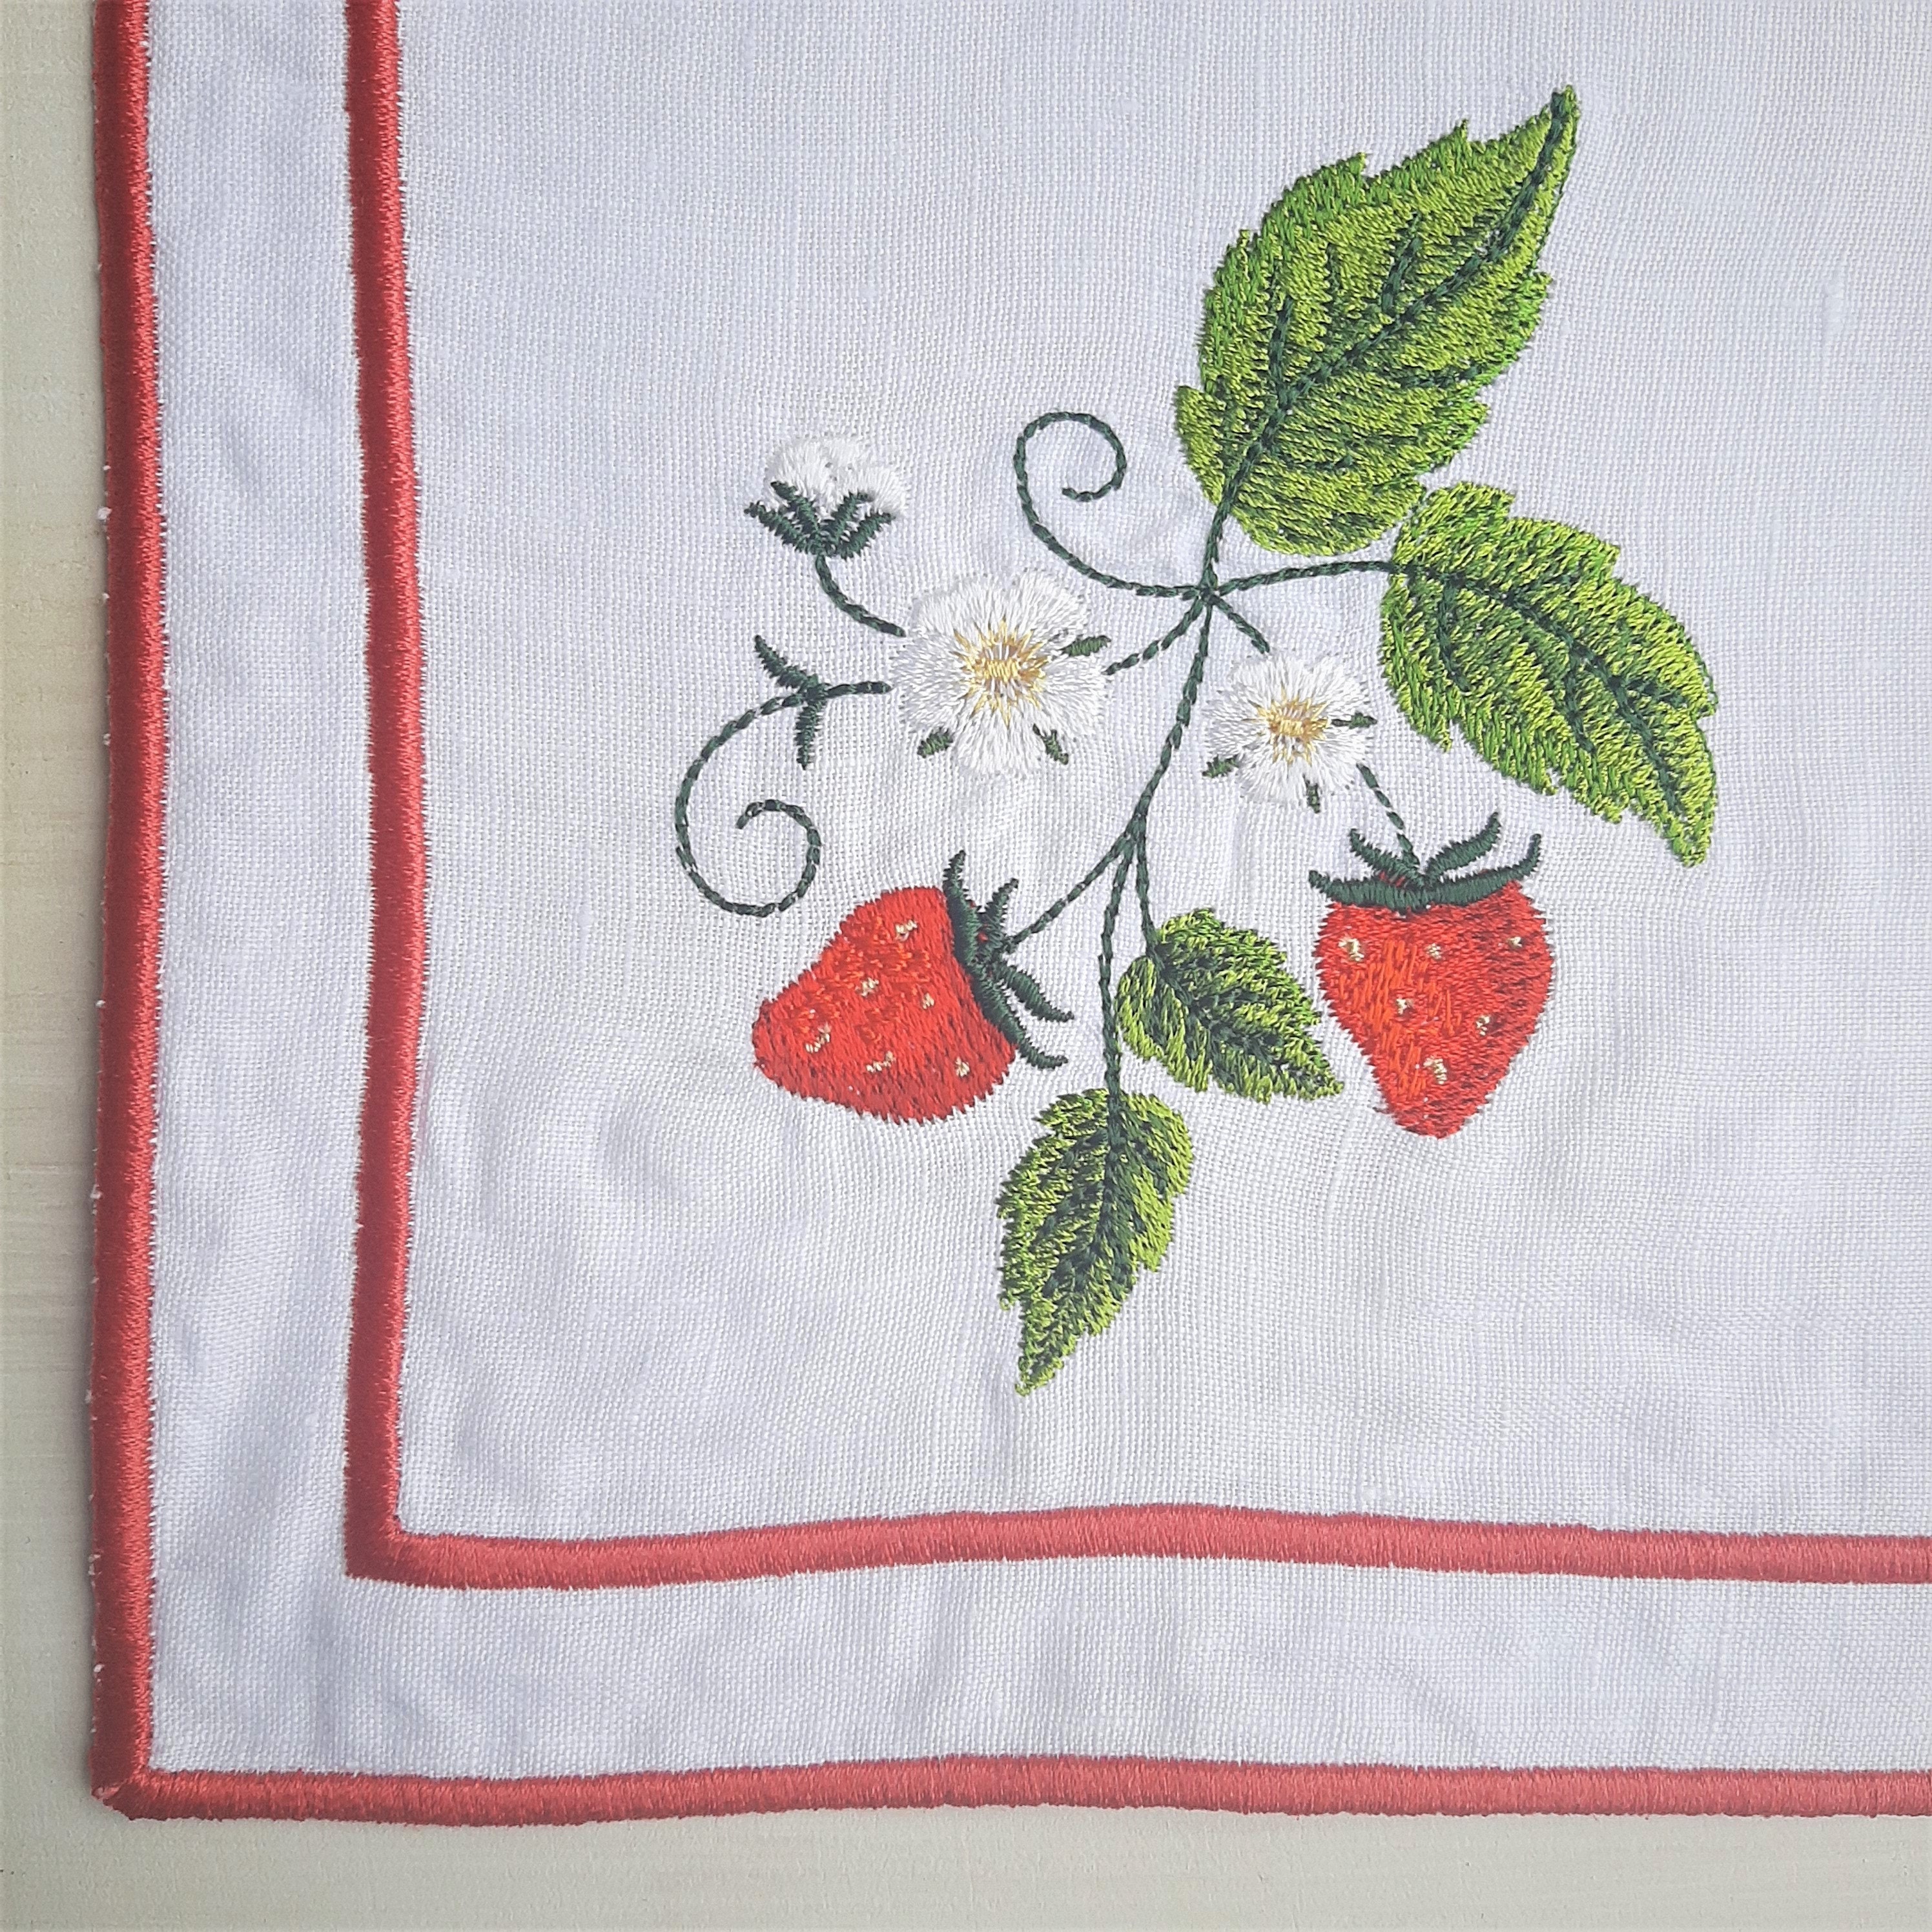 Strawberry Embroidered Napkin Set of 4 Red White Napkins